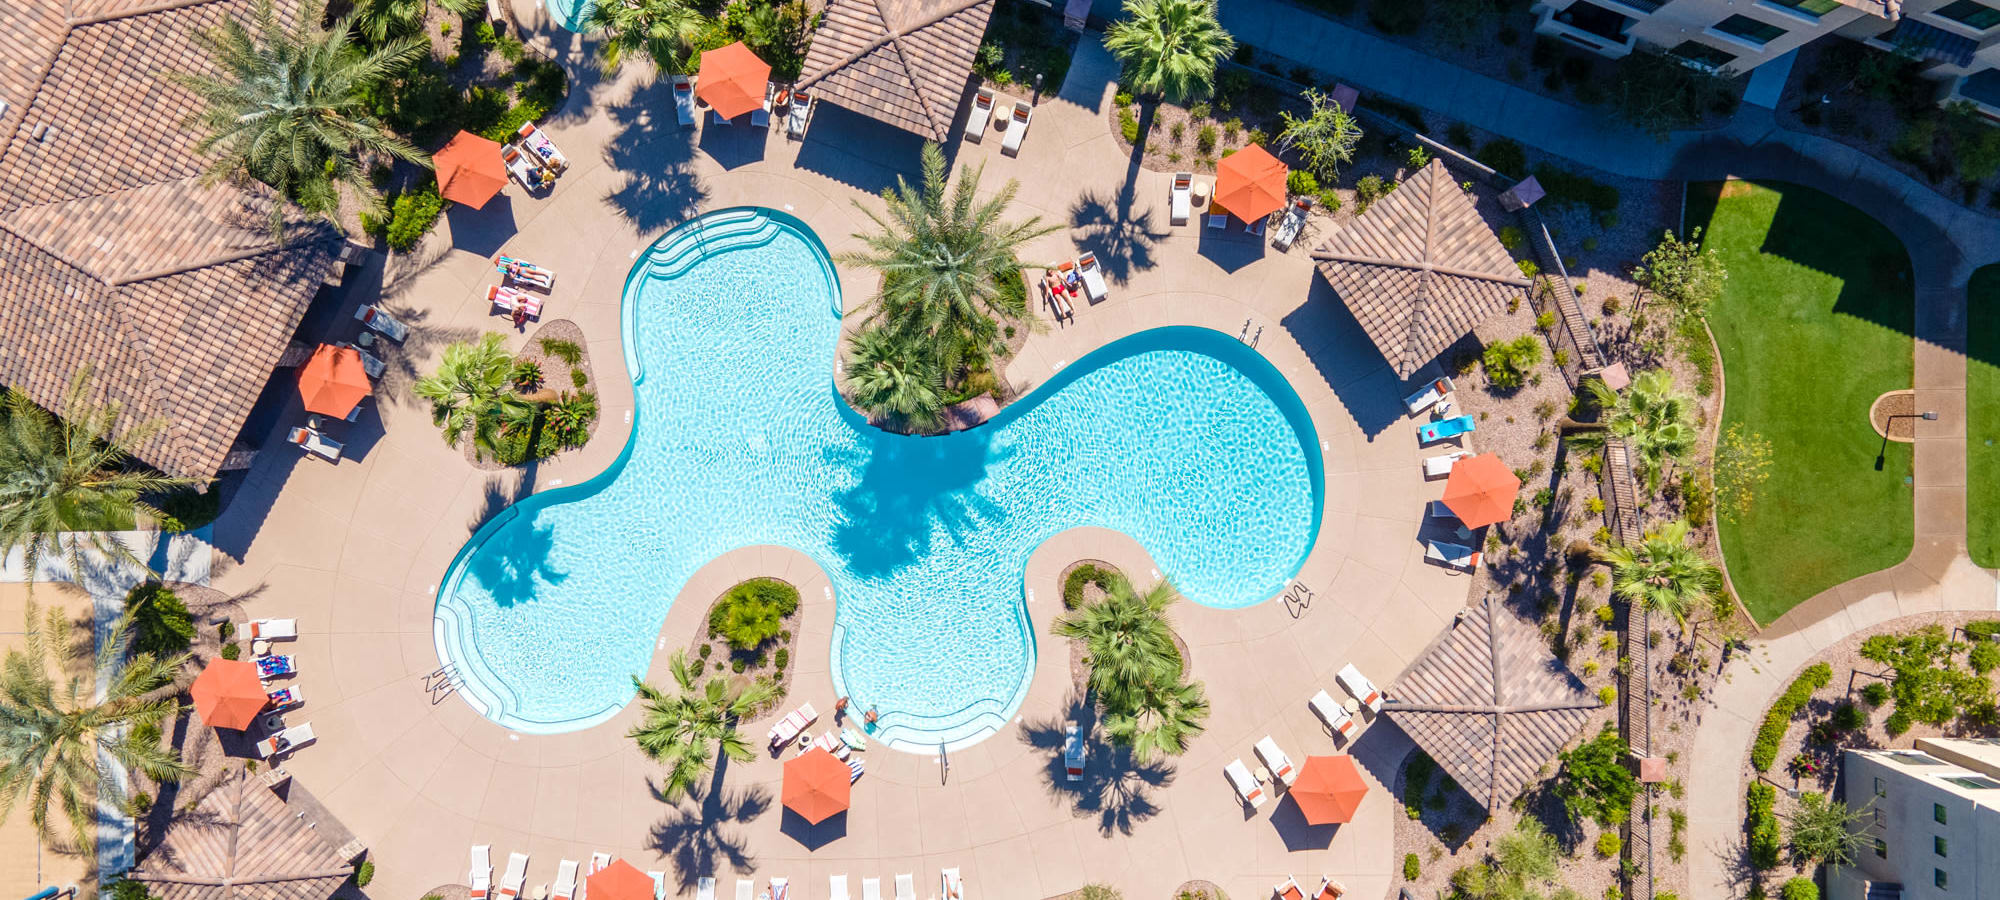 Lush landscape and resort style pool at San Milan in Phoenix, Arizona